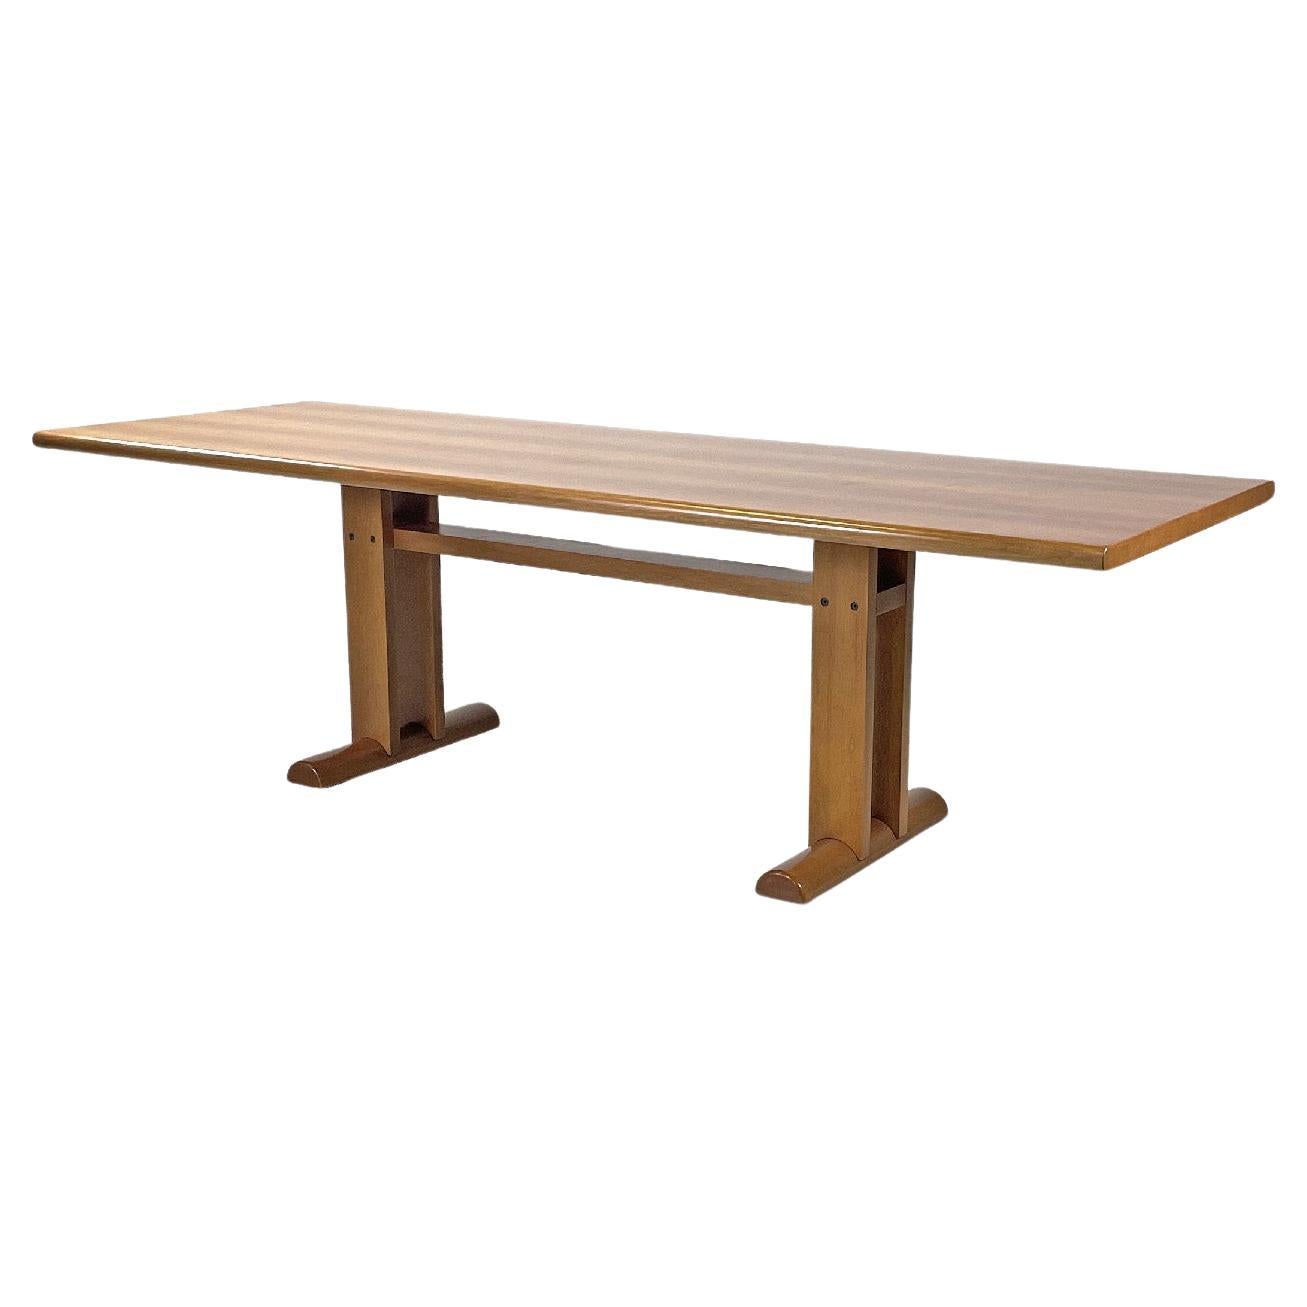 Italian modern rectangular wooden dining table, 1980s For Sale